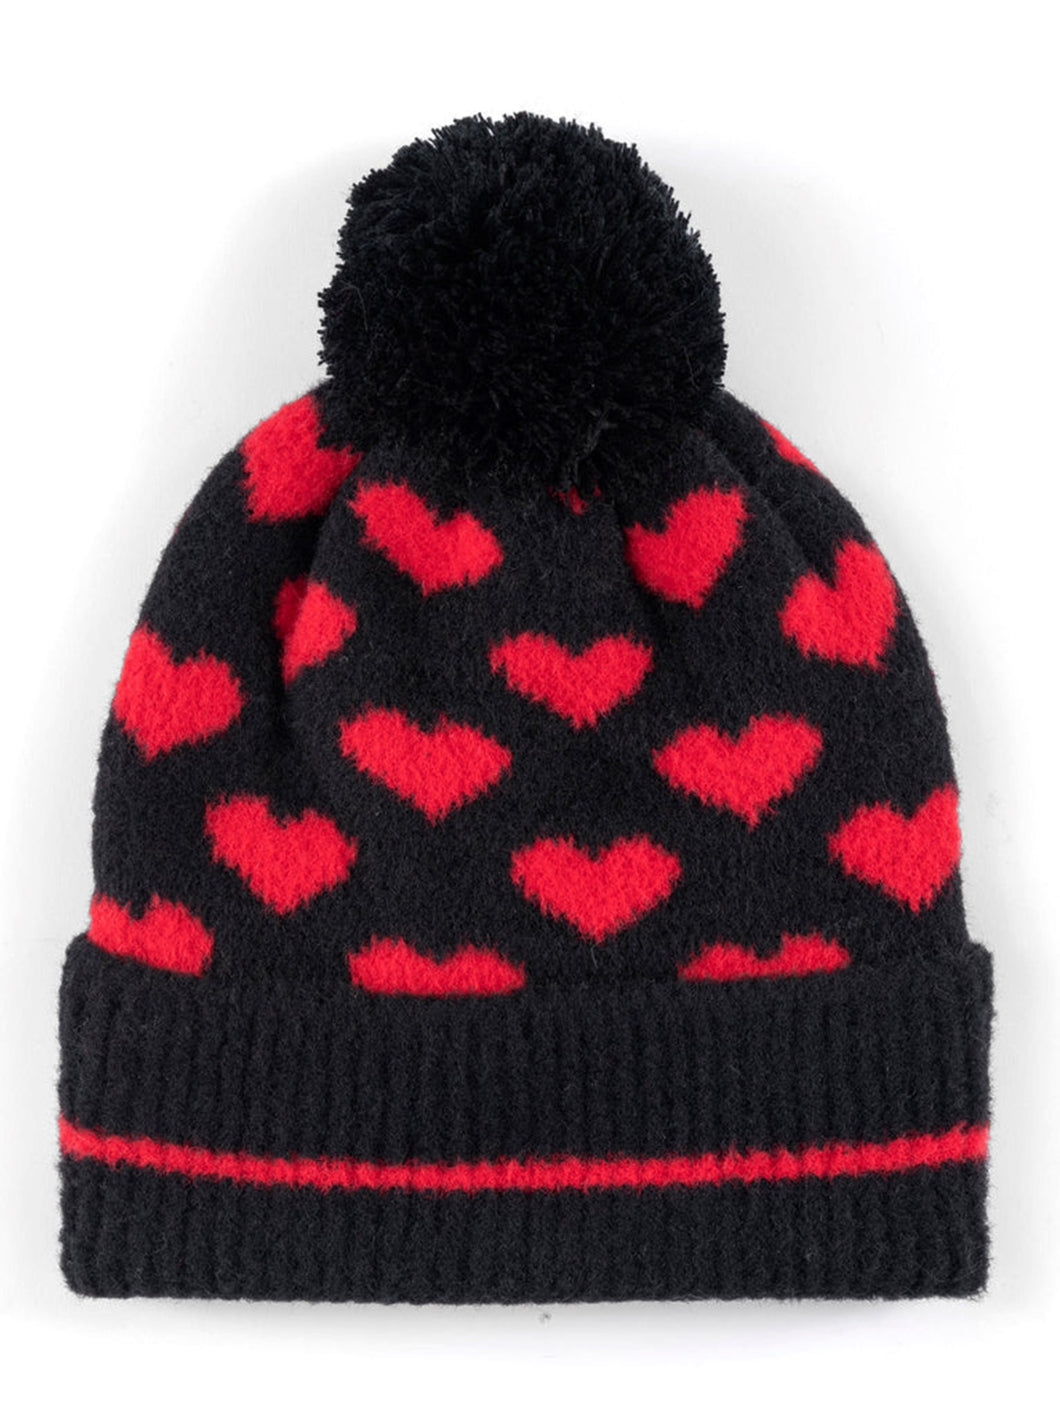 Valentina Hat-Black/Red Hearts